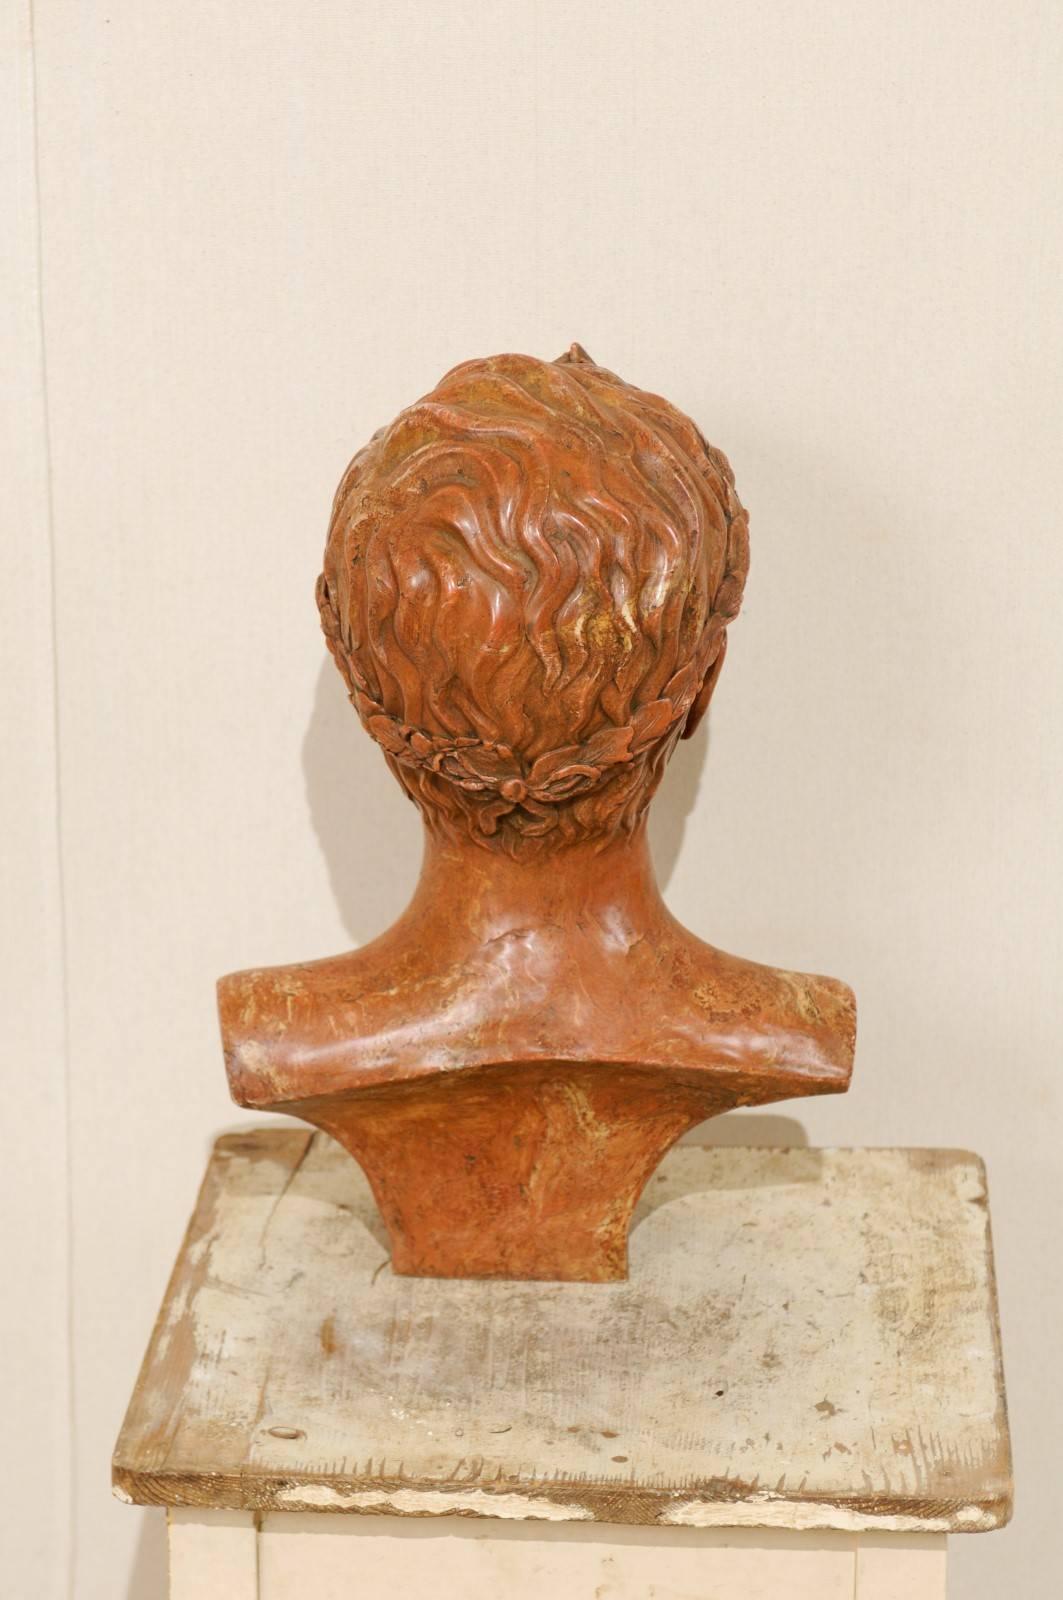 Marbleized Resin Bust of an Unknown Roman Emperor Wearing a Wreath Headband 2